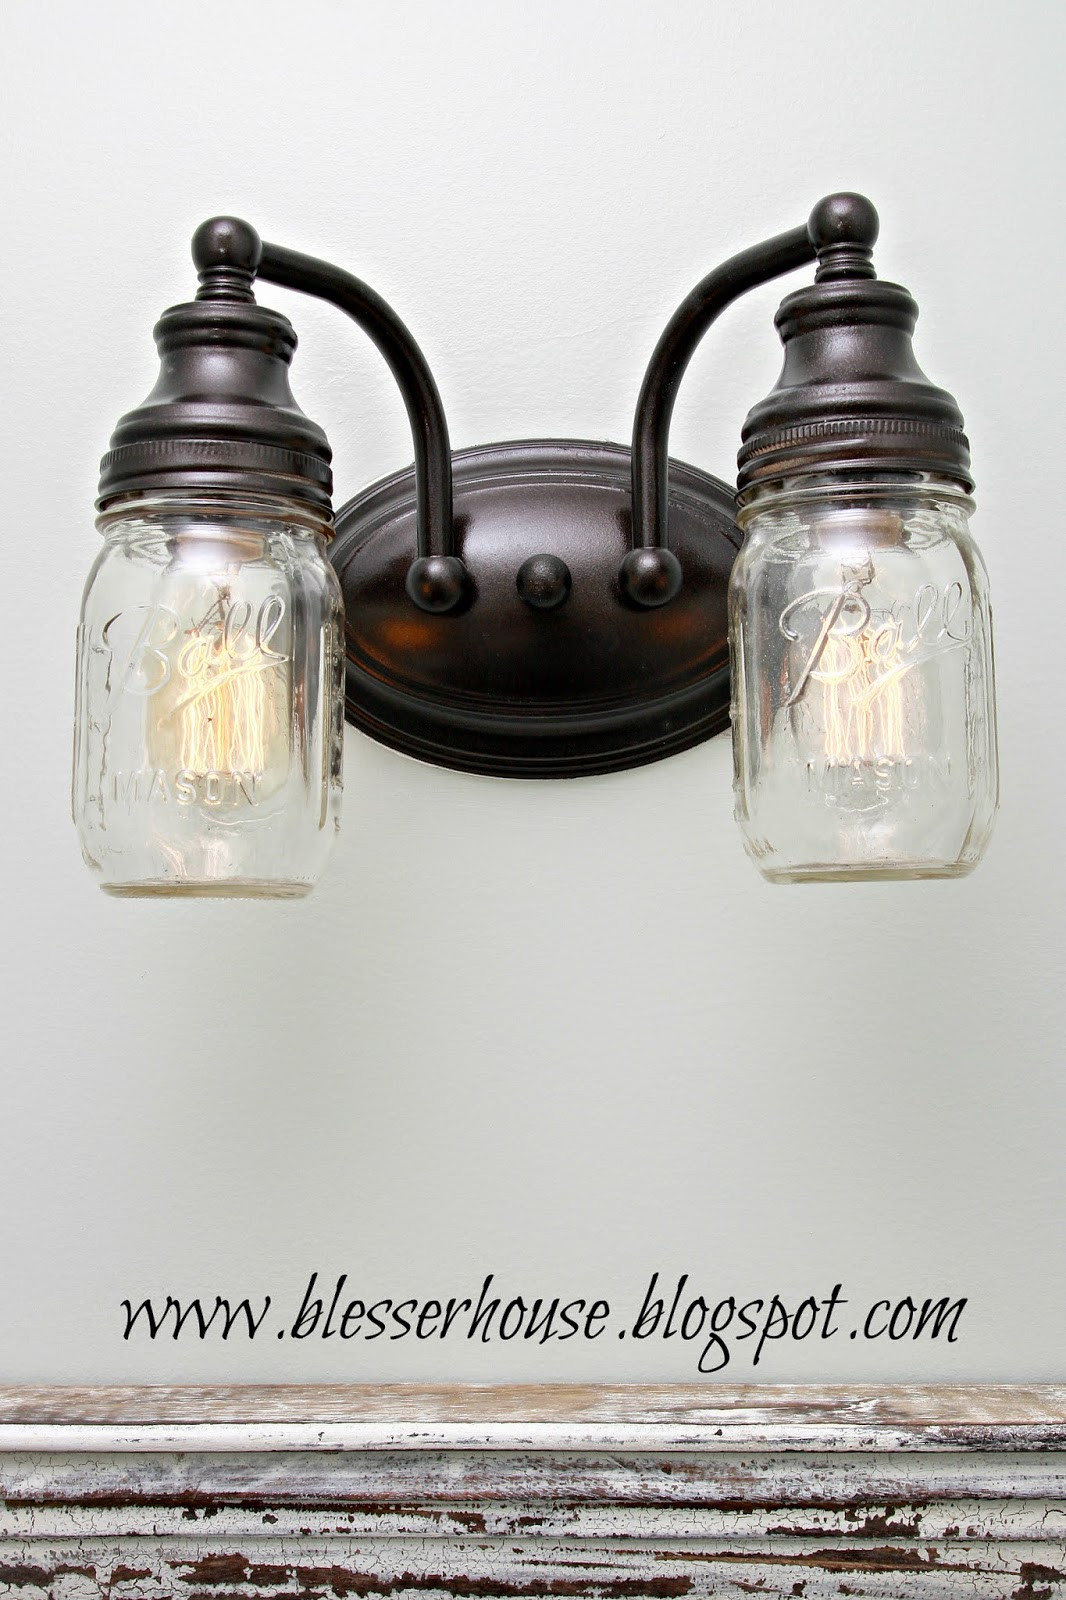 Best ideas about DIY Bathroom Lights
. Save or Pin DIY Mason Jar Vanity Light Bless er House Now.